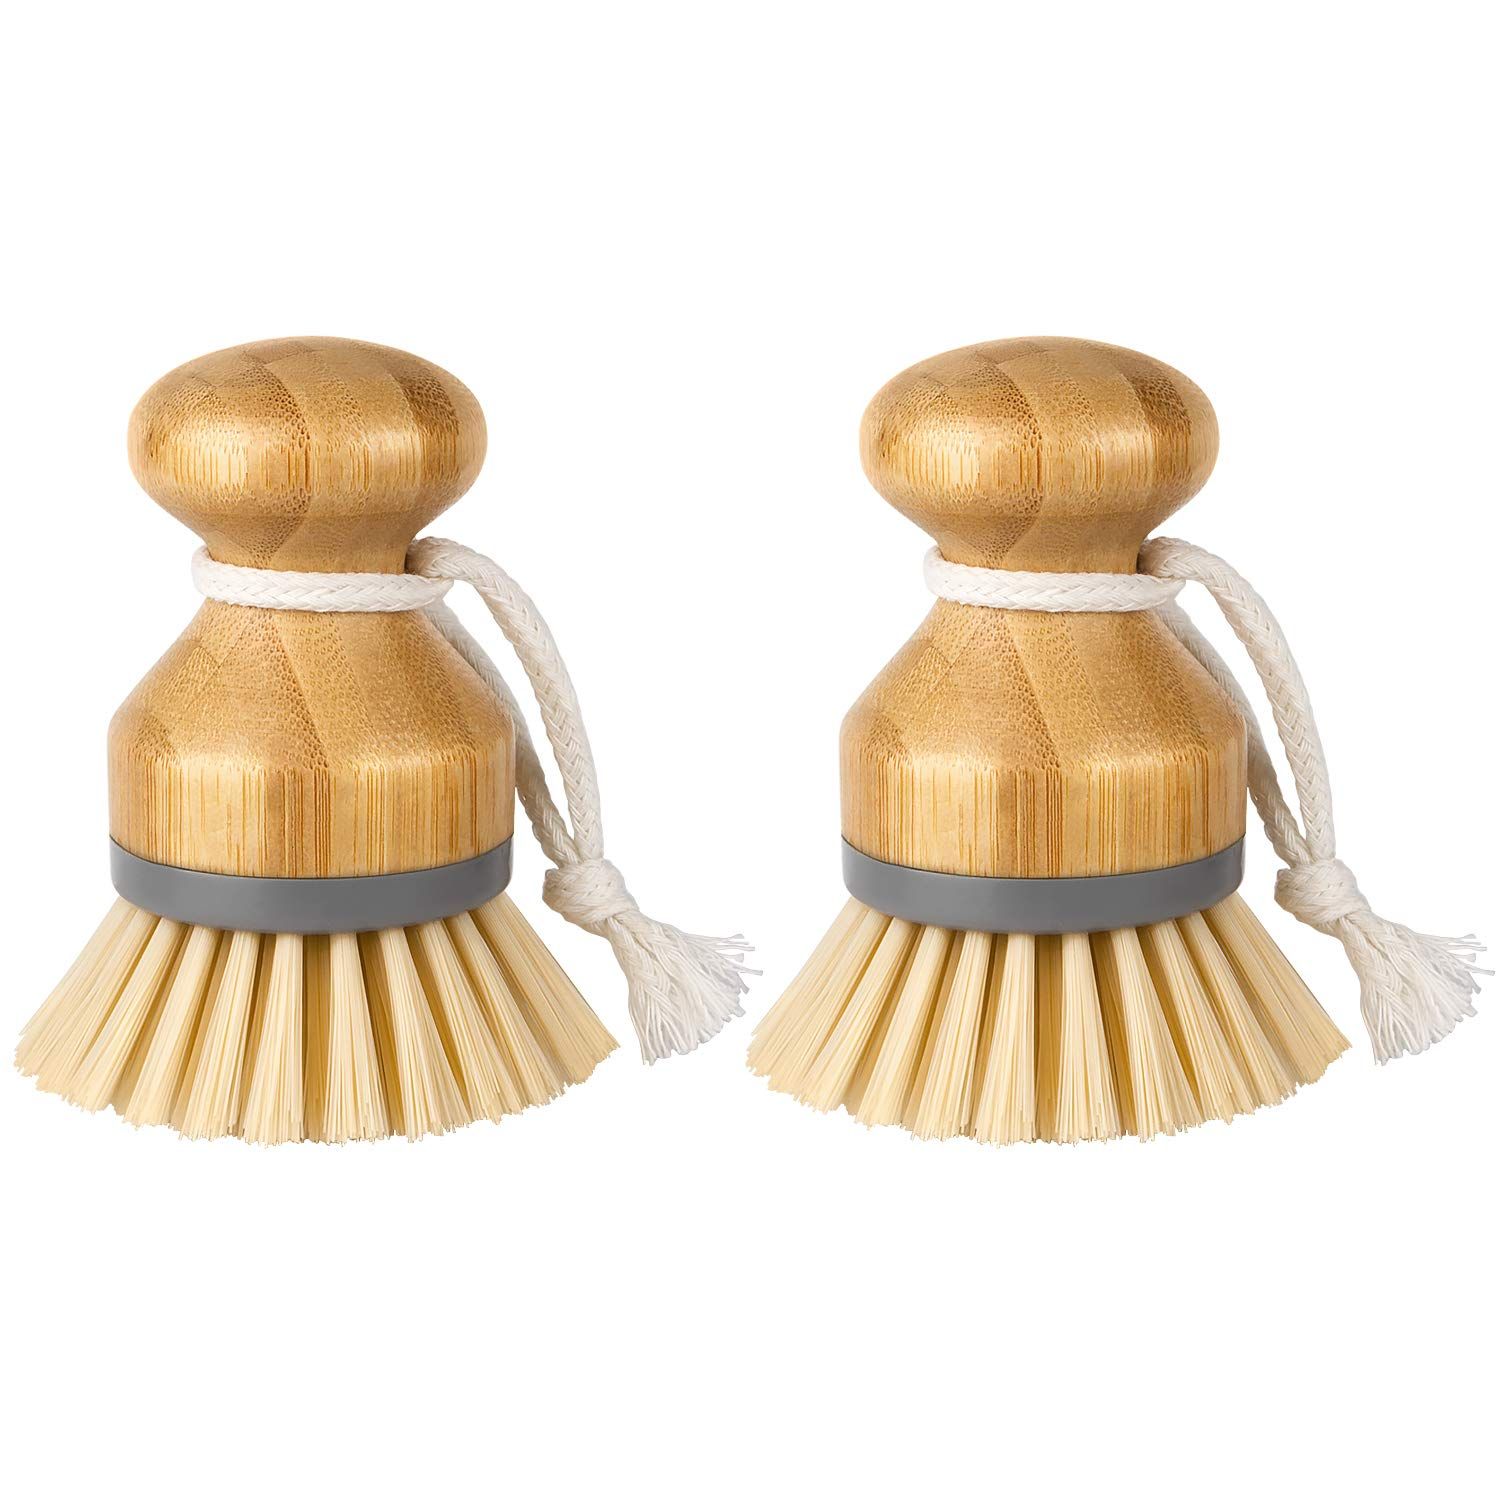 MR.SIGA Bamboo Palm Brush, Scrub Brush for Dish Pots Pans Kitchen Sink Cleaning, Pack of 2 | Amazon (UK)